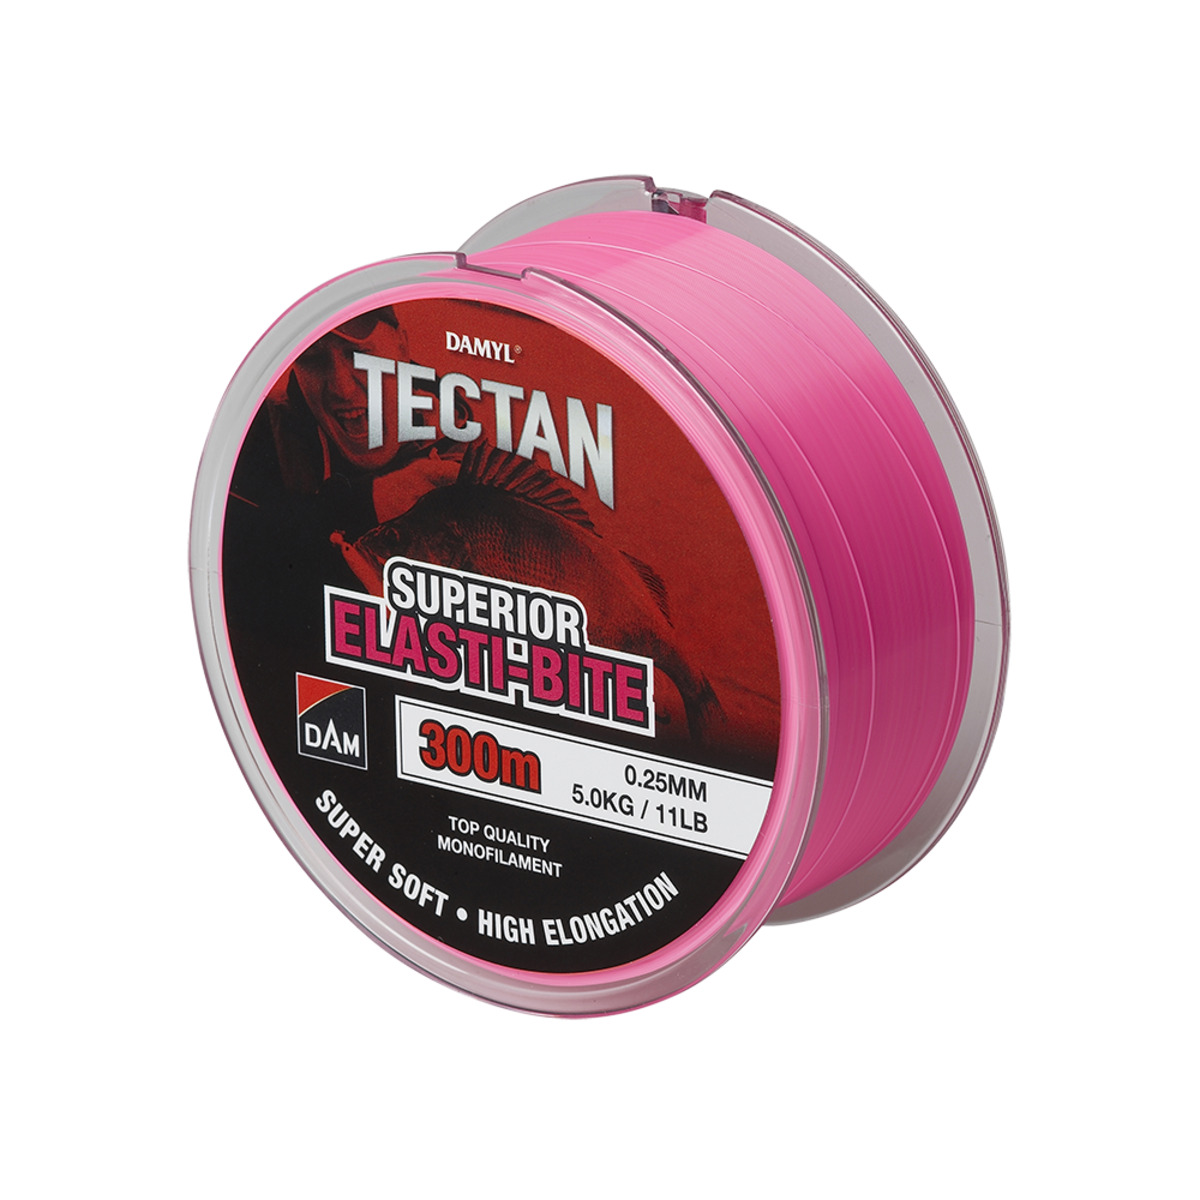 Dam Tectan Superior Elasti-bite 300m - 0.35MM 9KG 20LBS PINK